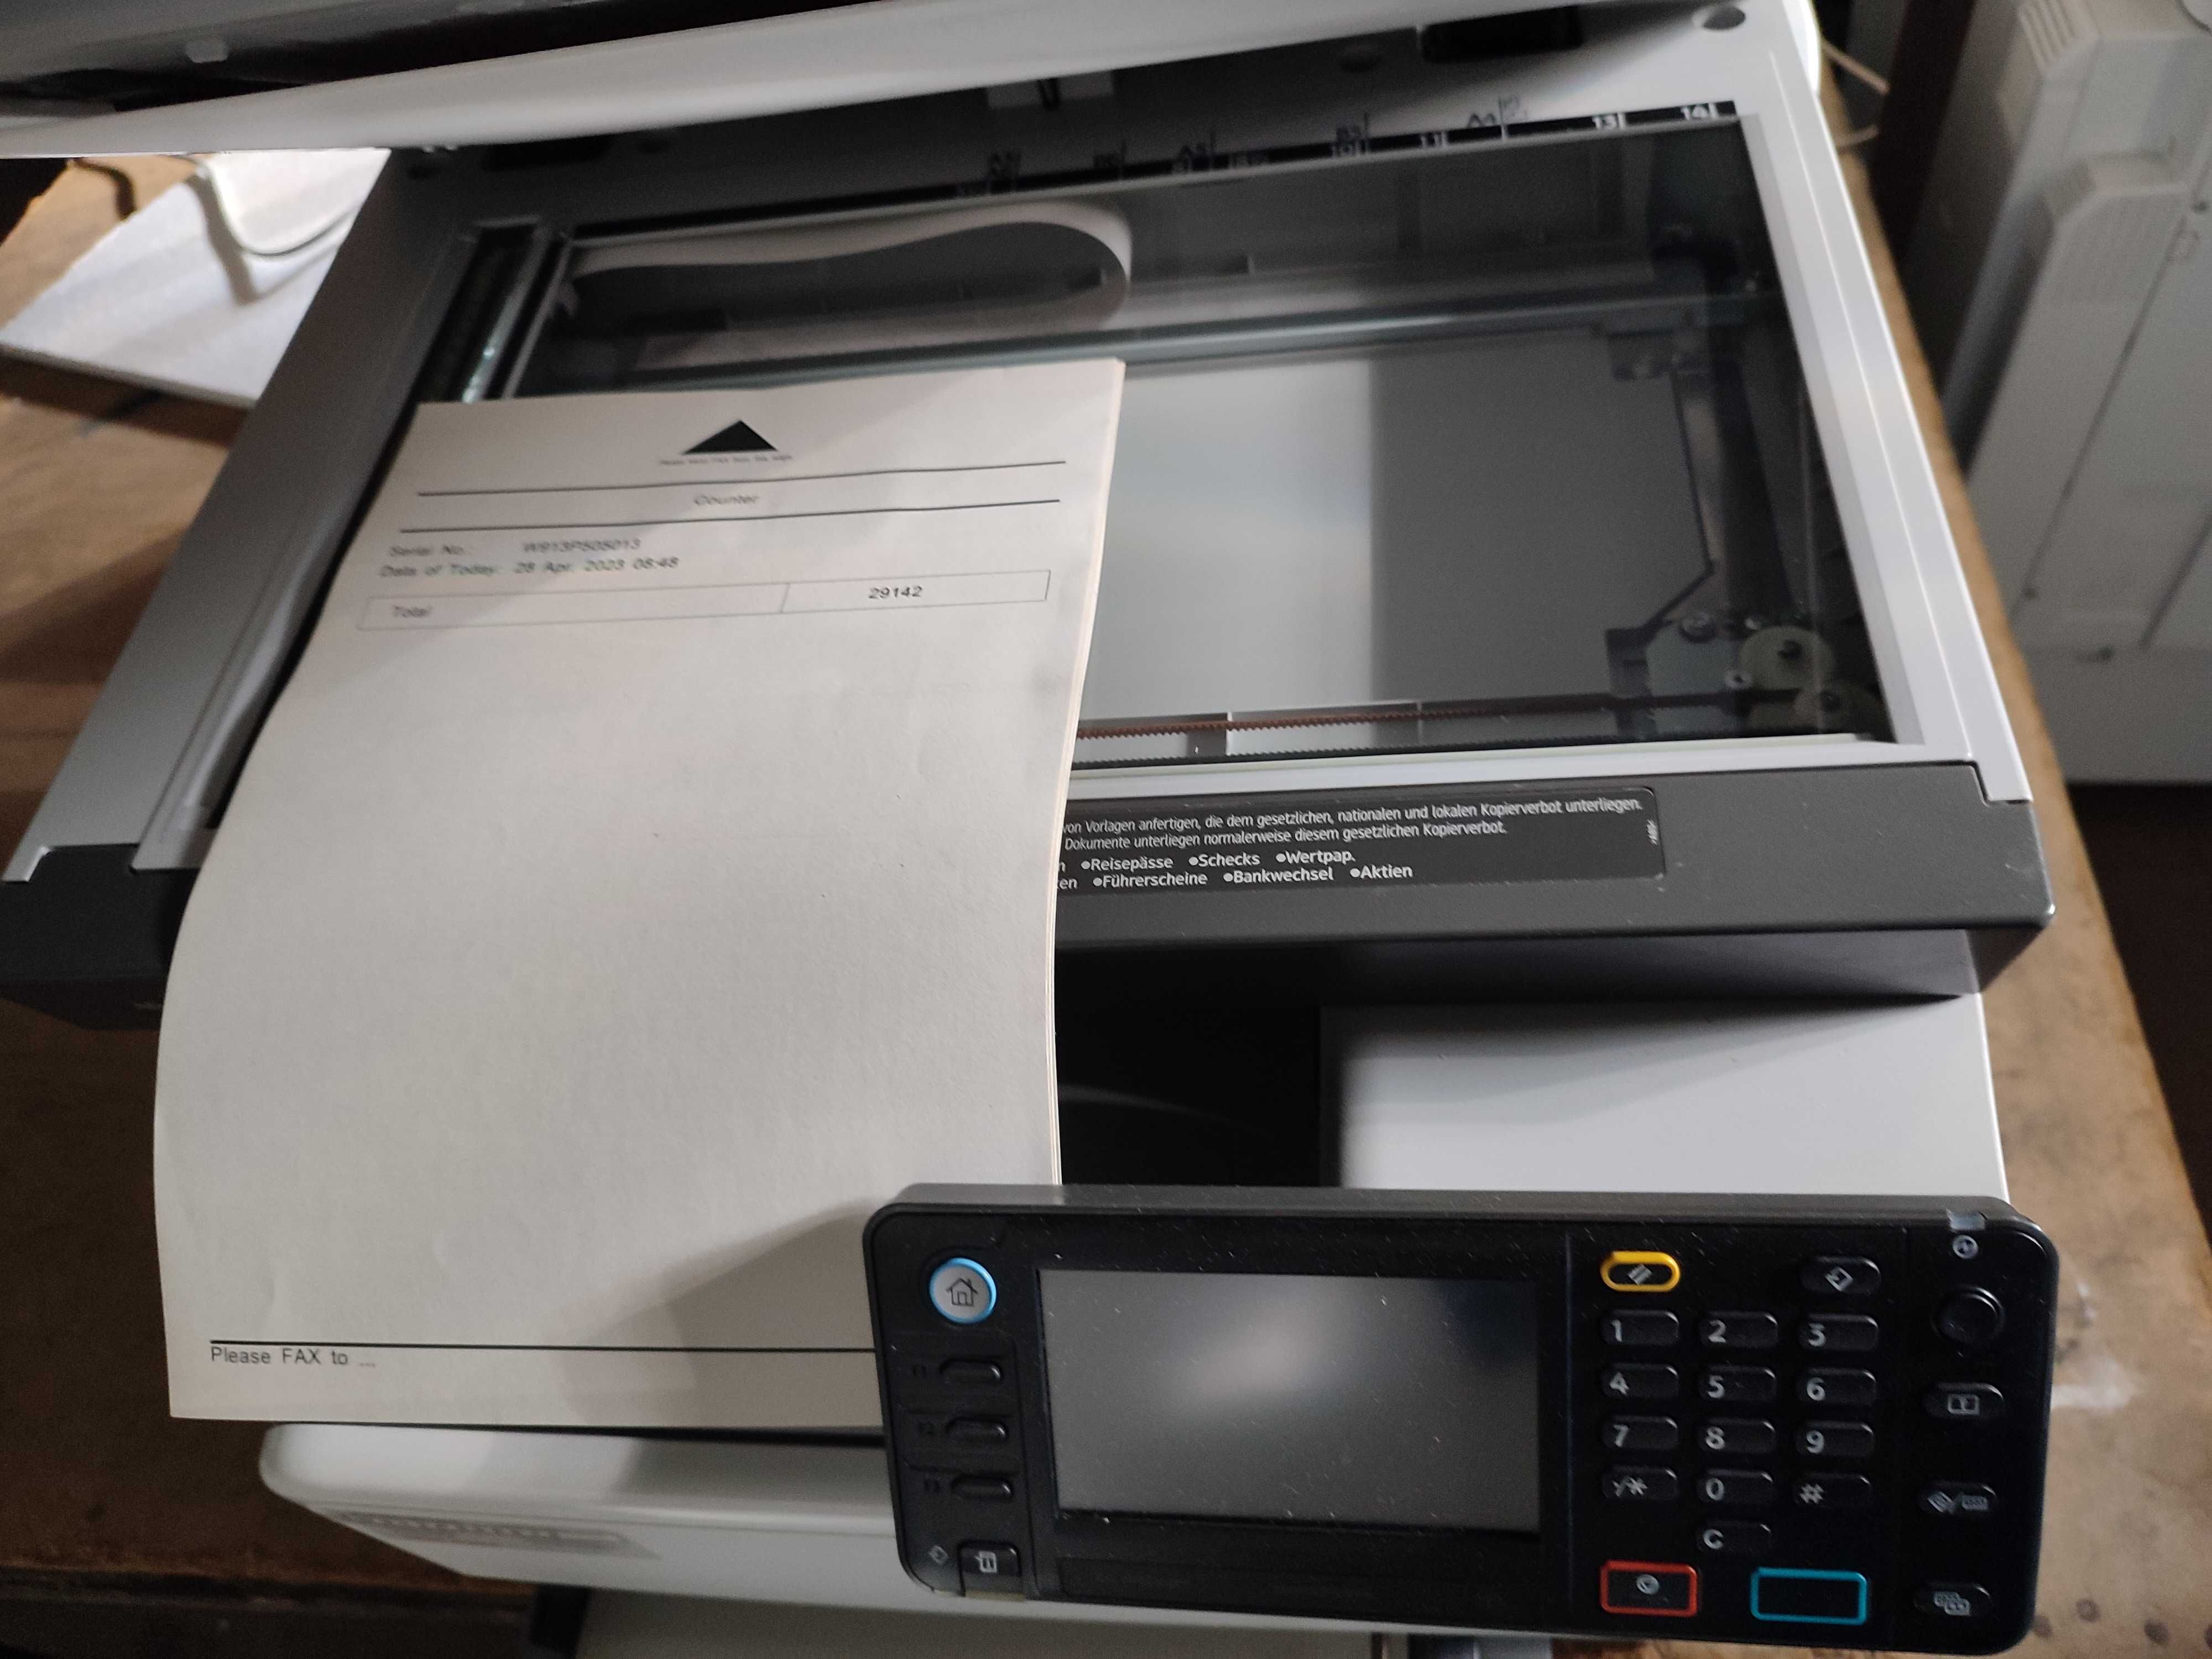 kserokopiarka drukarka a4 mono wielofunkcyjna Ricoh mp301spf